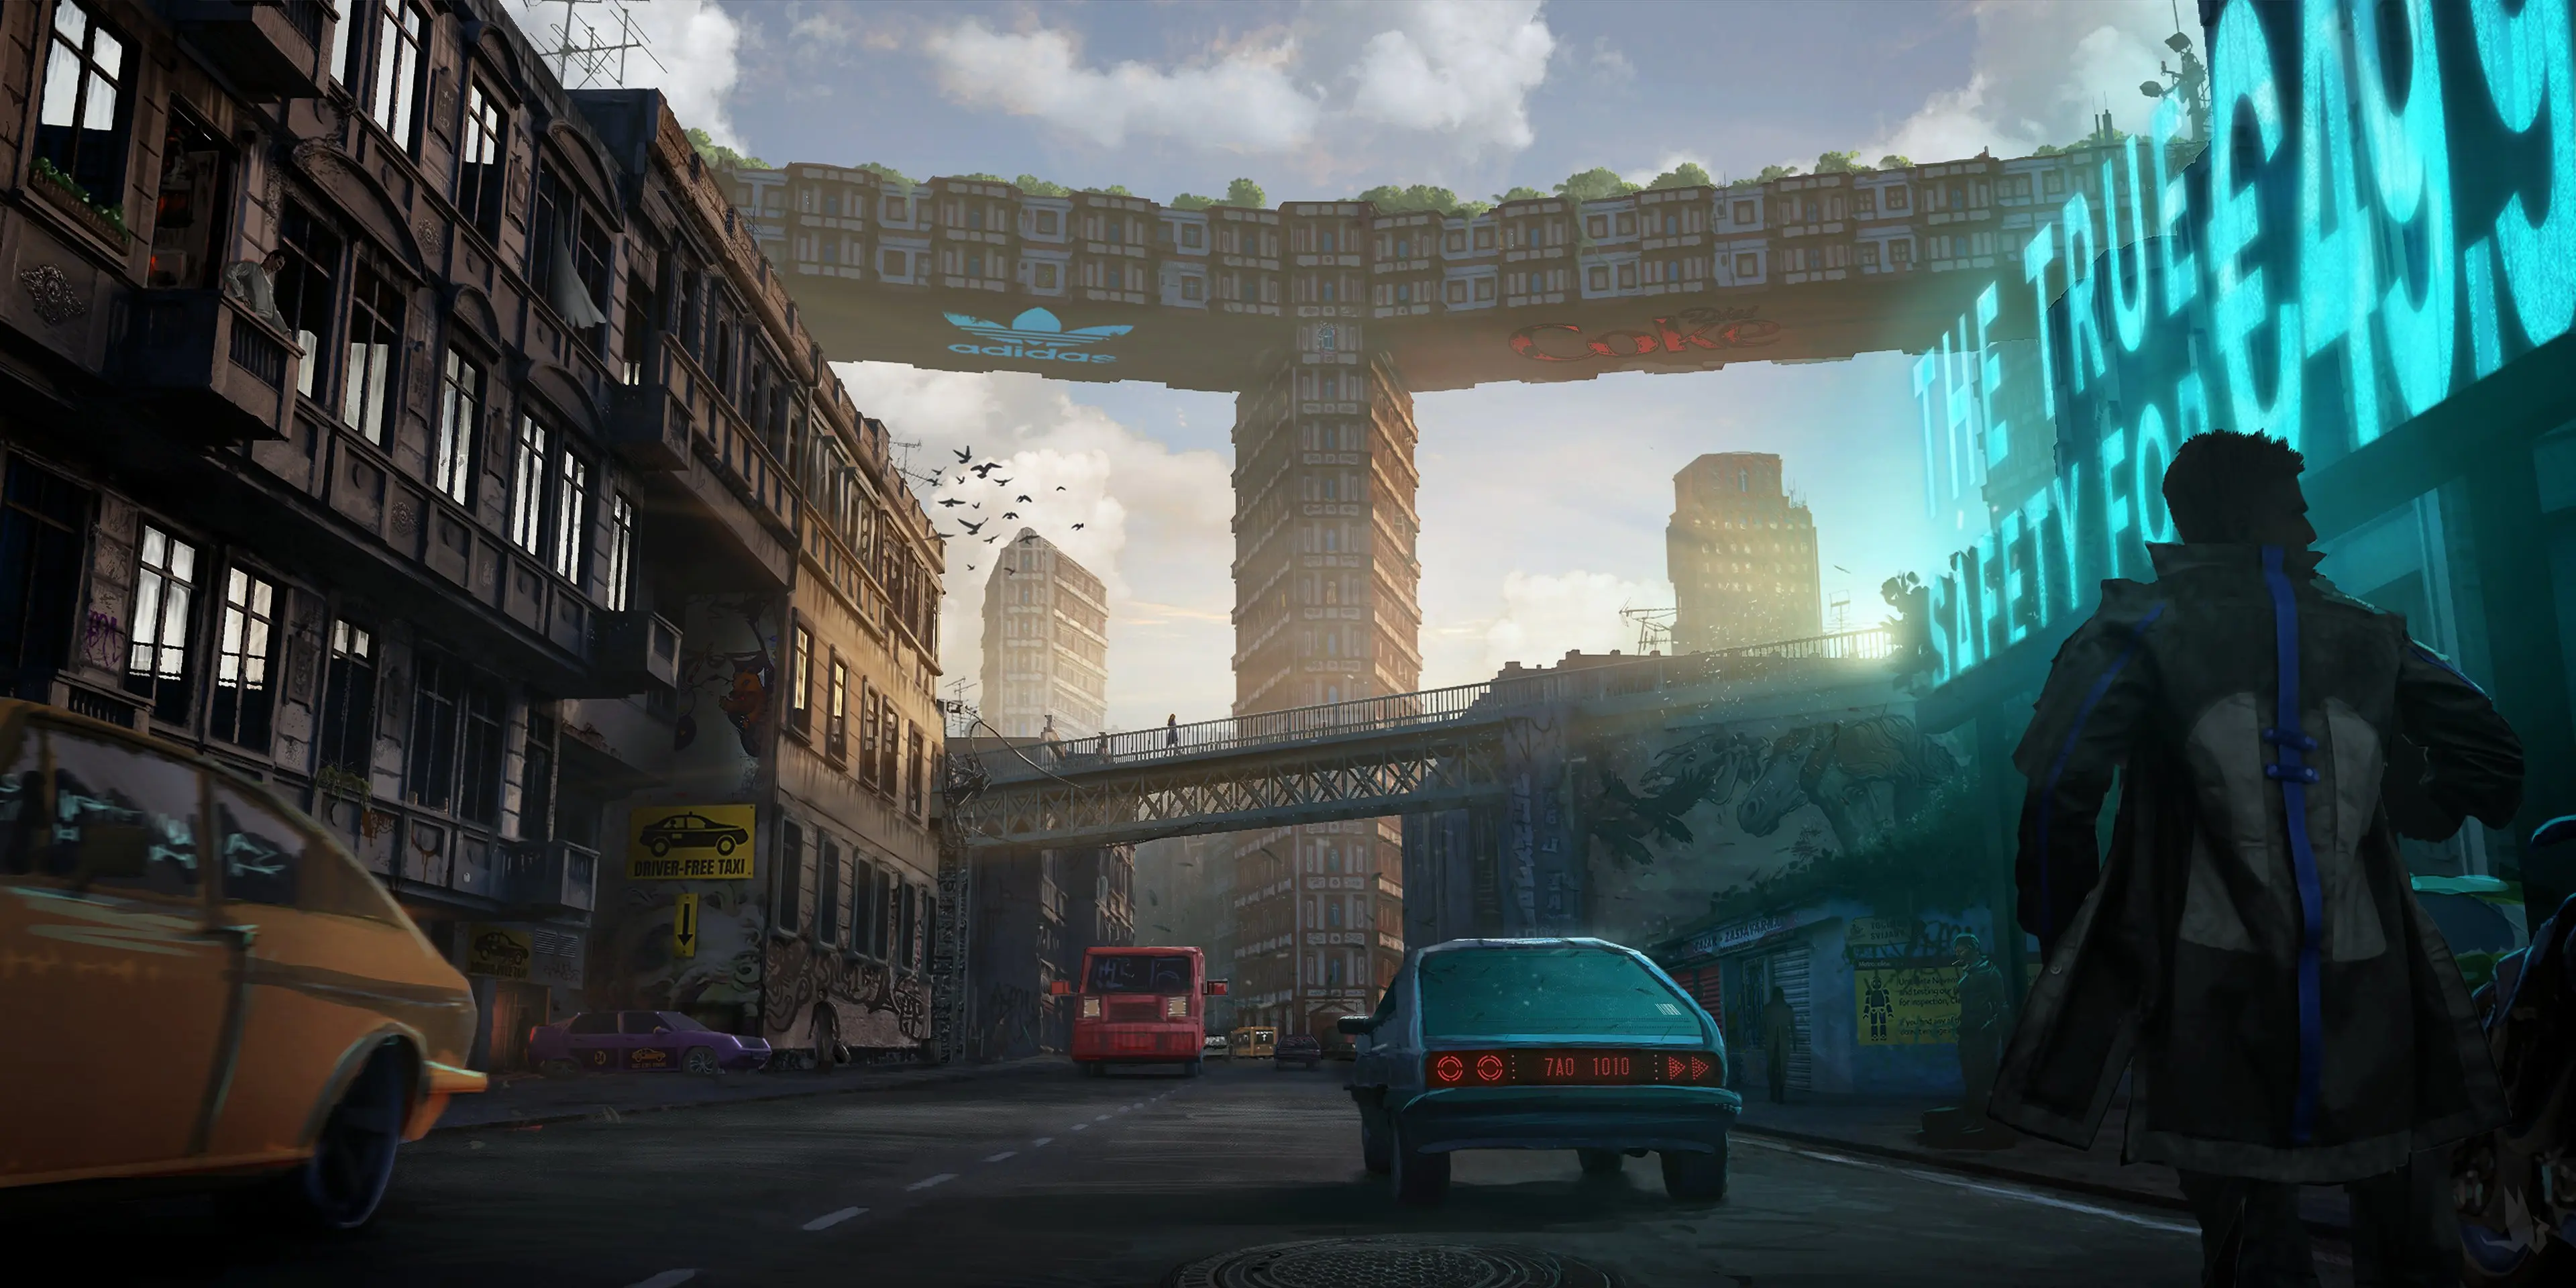 Bod obnovy: Zapomeňte na komedie, nový český sci-fi film se inspiruje hrou Cyberpunk 2077